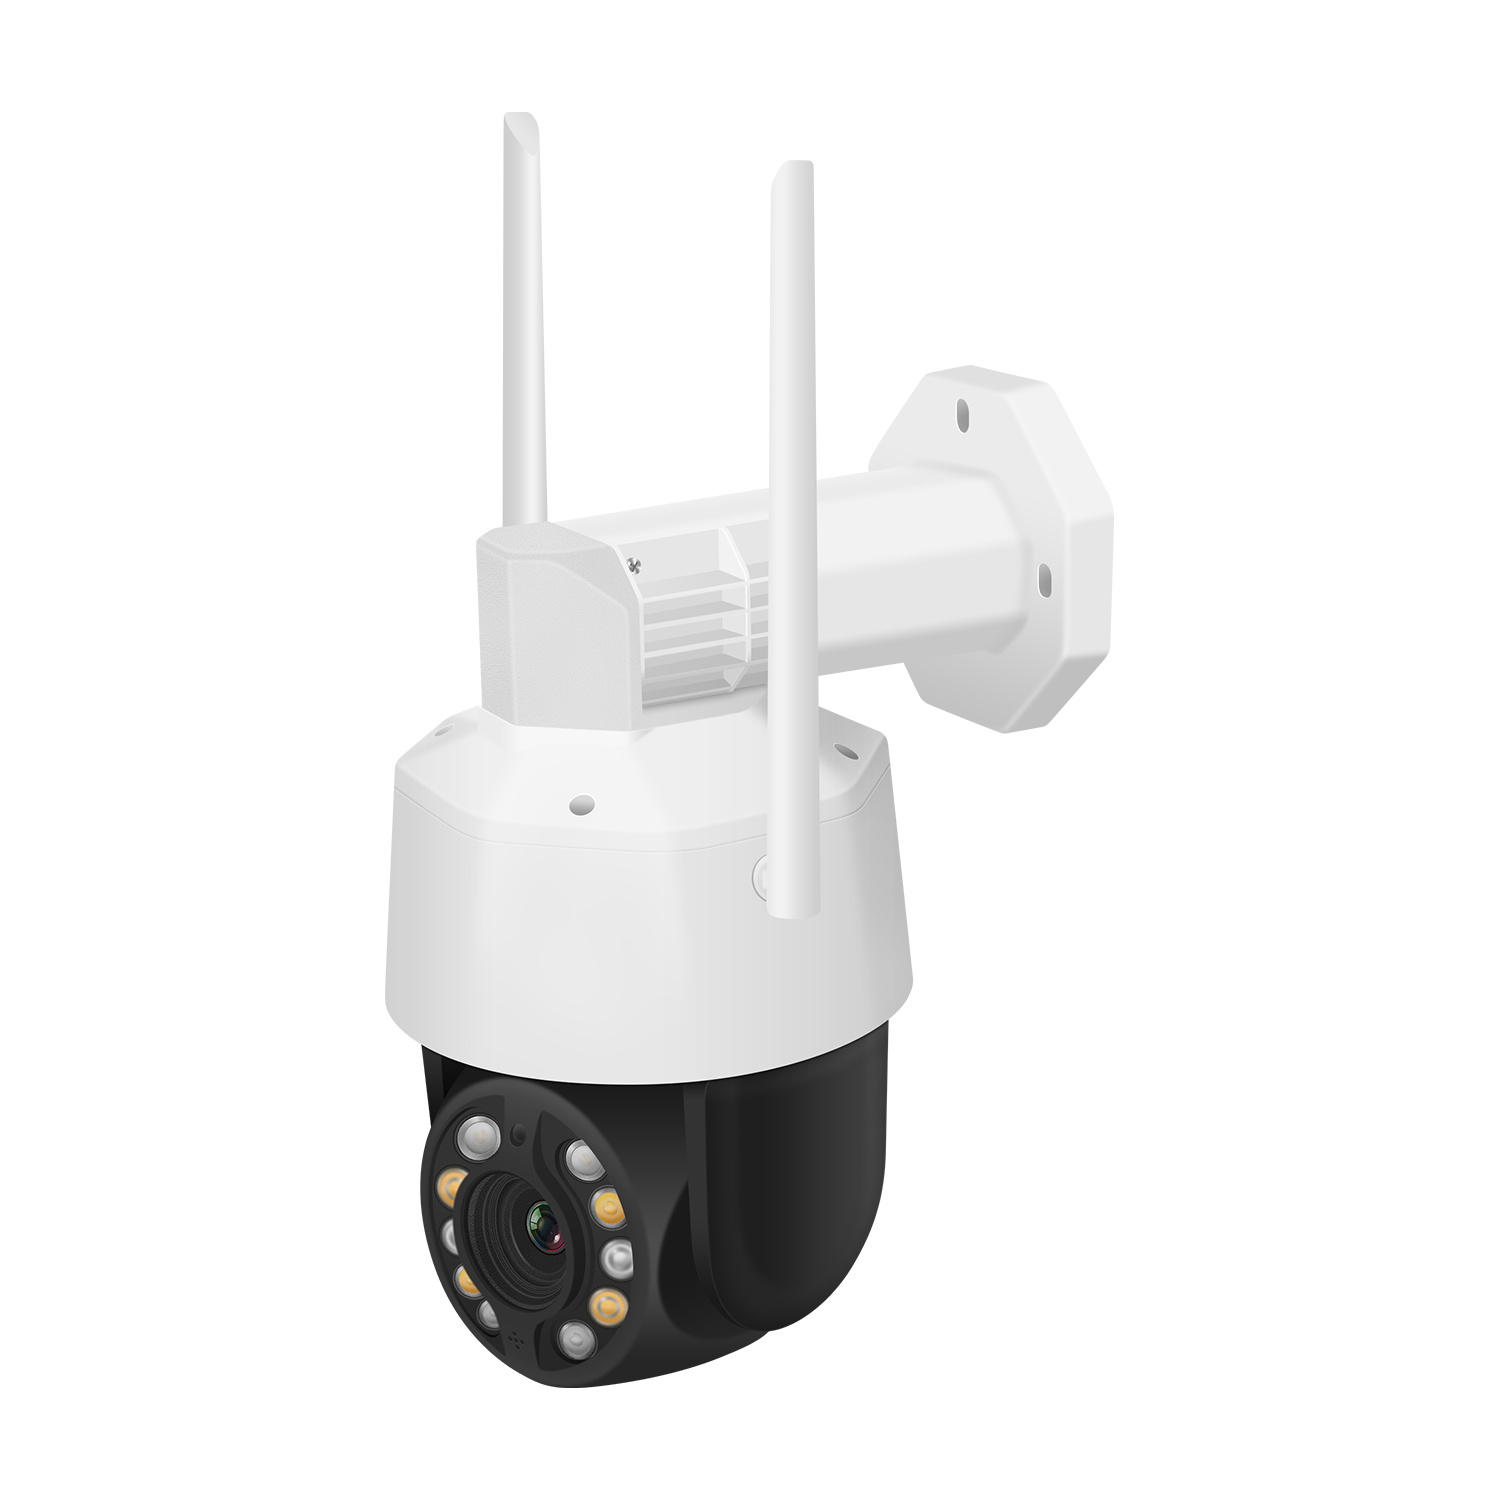 WiFi PTZ Camera 5MP 20xzoom Outdoor IP Camera 2-Way Audio Waterproof Tuya CCTV Security Surveillance